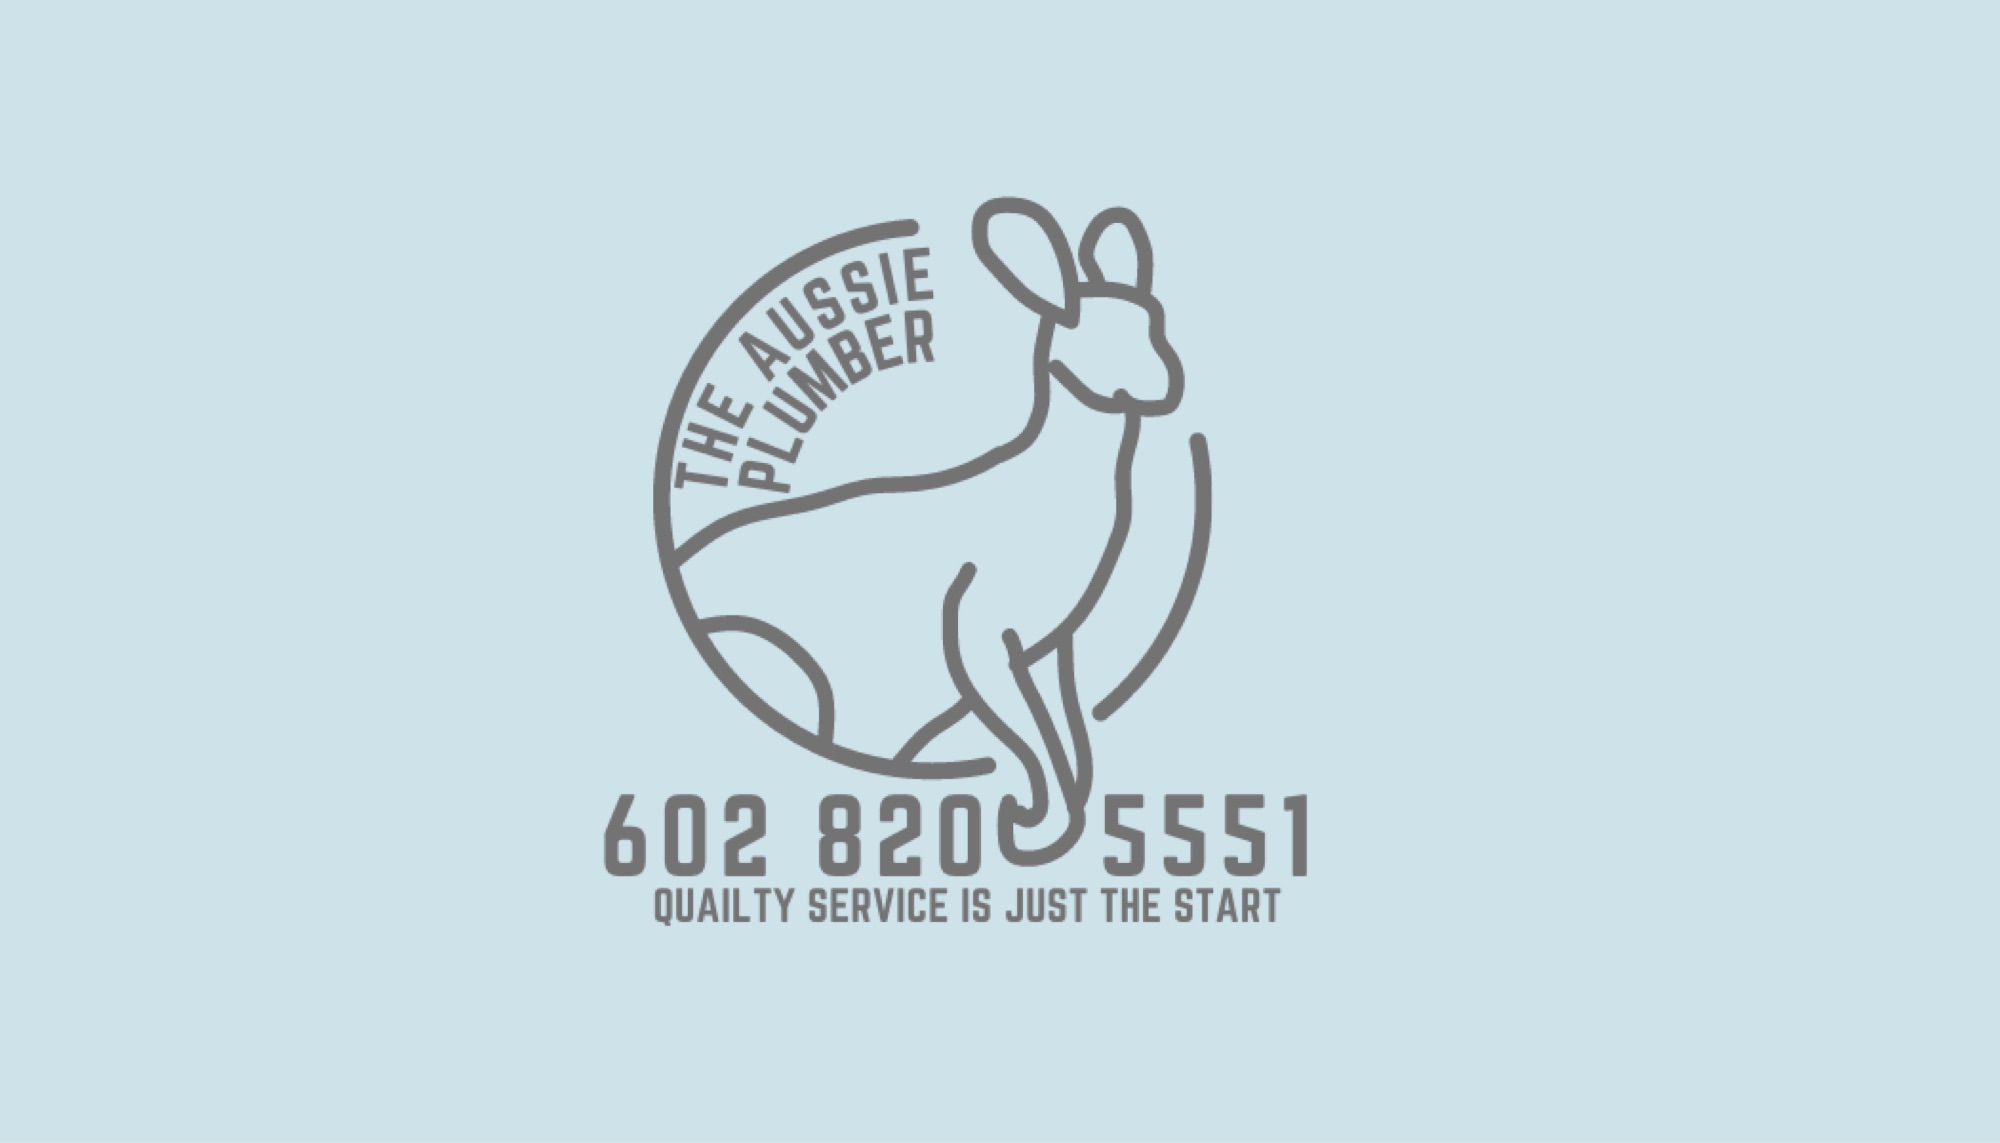 The Aussie Plumber Logo